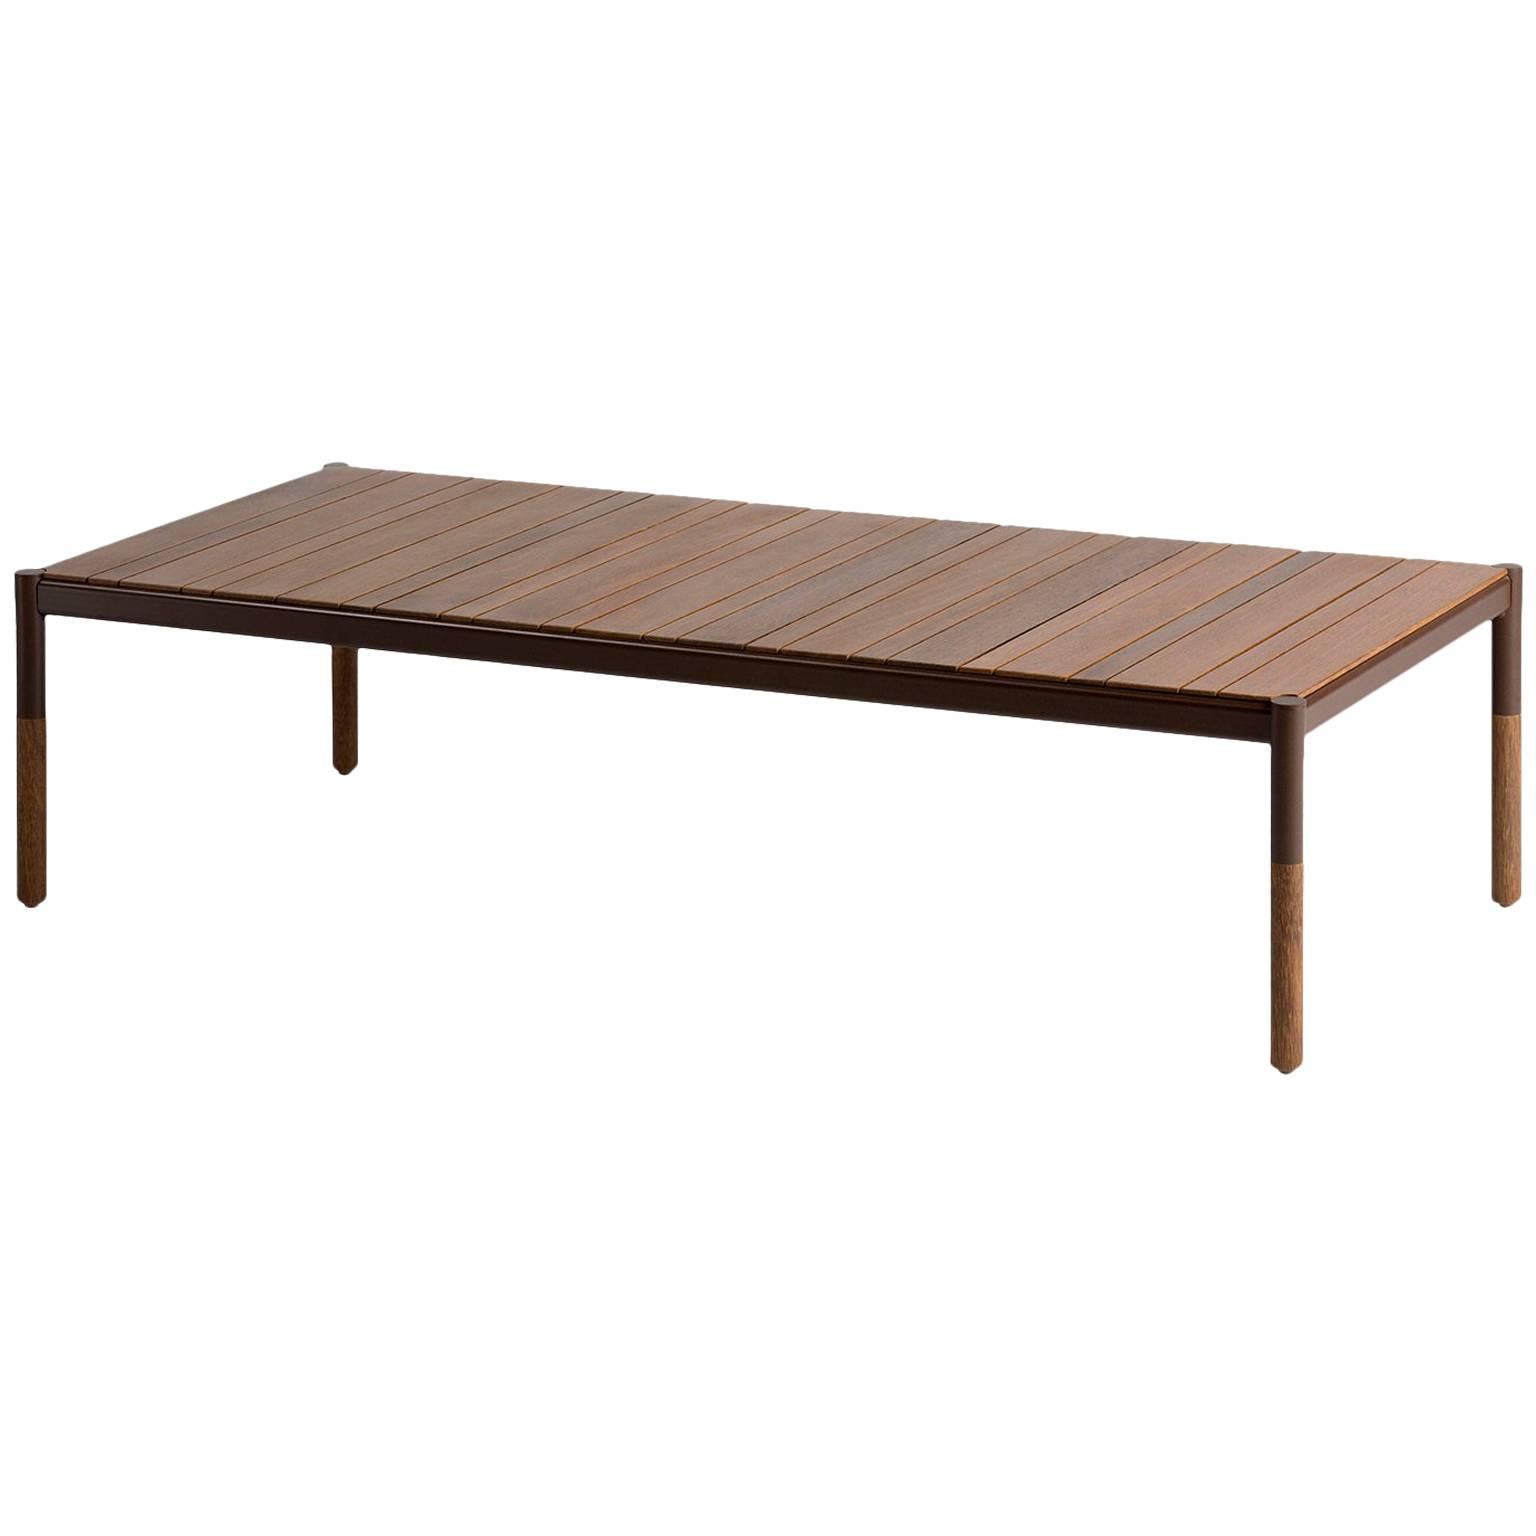 Hardwood and Metal Outdoor Center Table, Minimalist Design